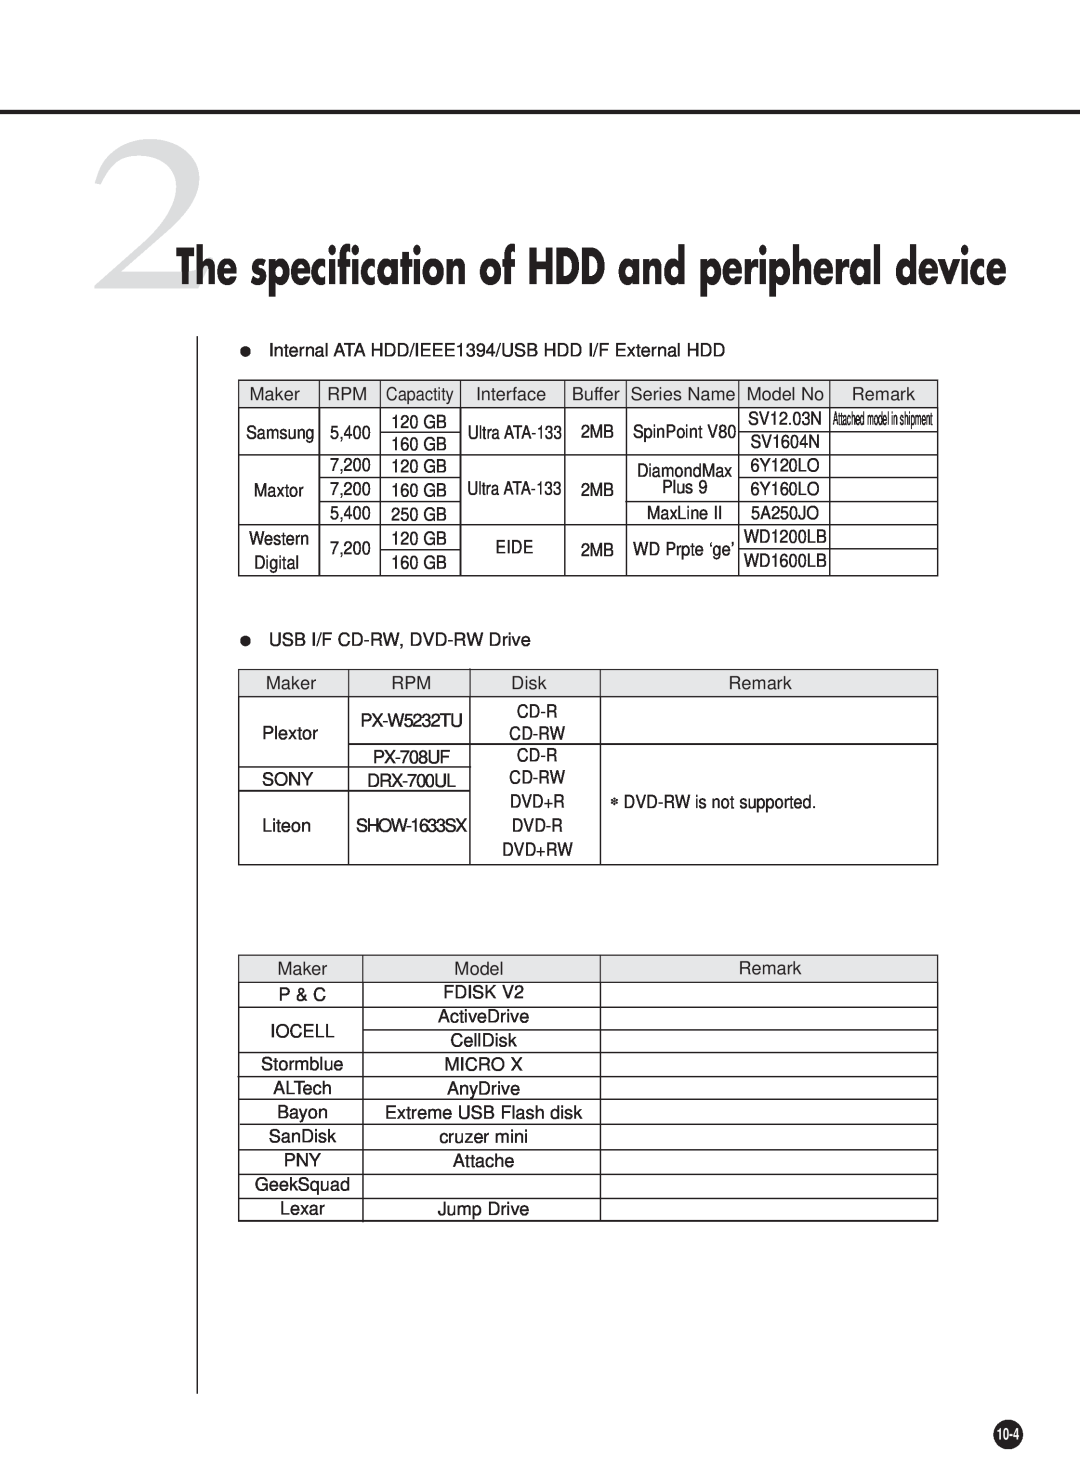 Samsung SHR-2040PX, SHR-2040P/GAR, SHR-2042P 2The specification of HDD and peripheral device, 6Y120LO, 6Y160LO, Western 